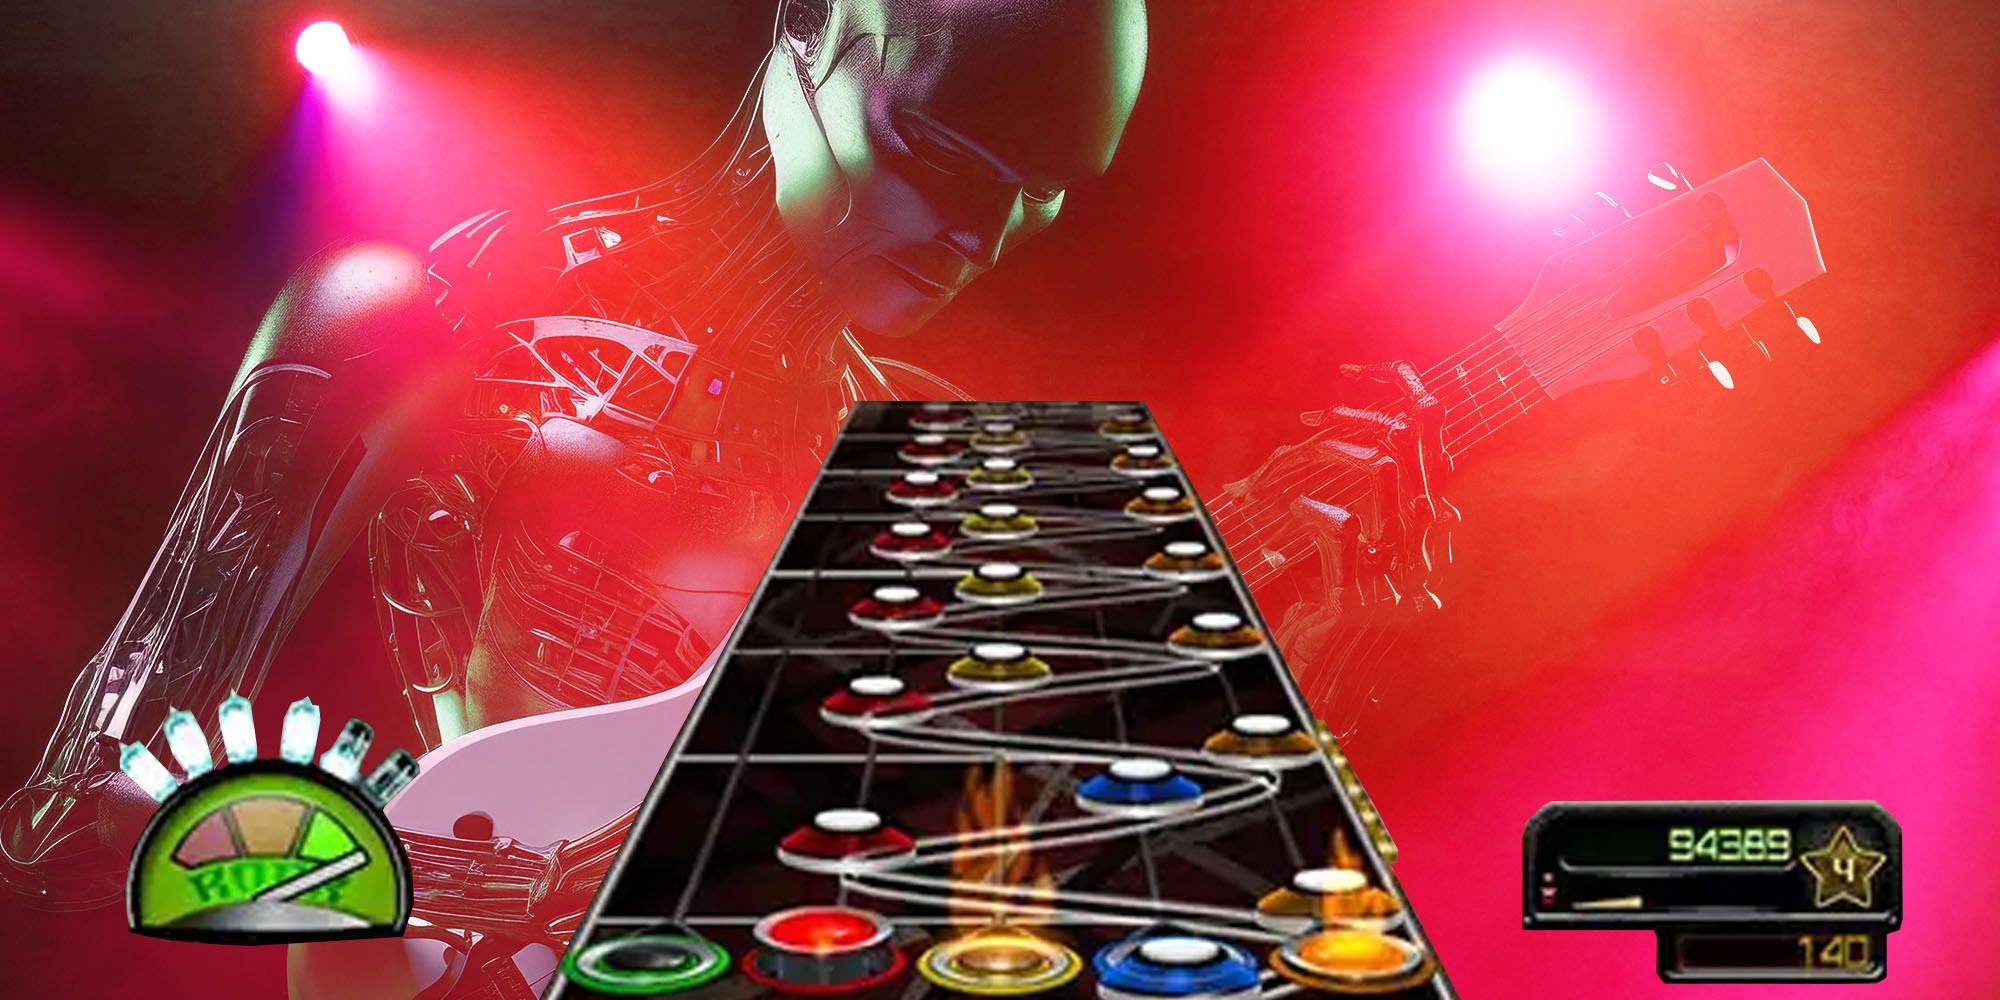 Guitar Hero' creators bullish on new game